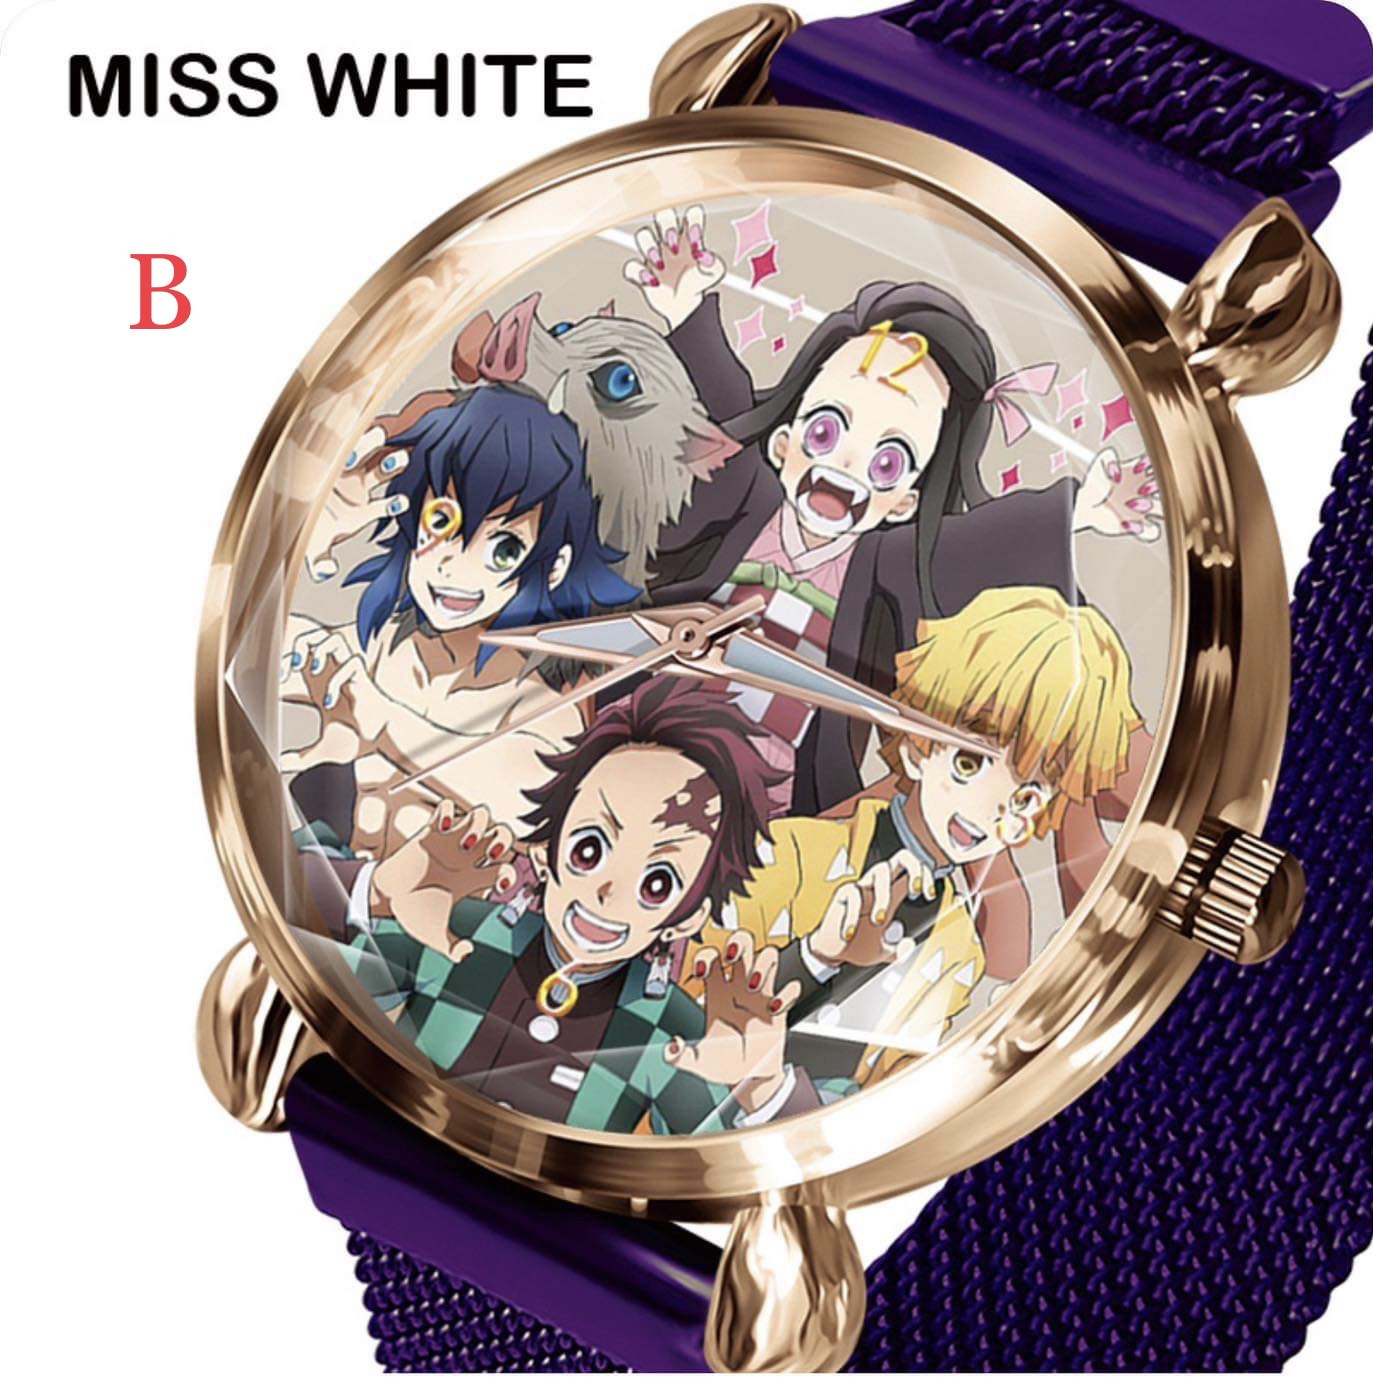 Anime Merch Watch Anime Manga Wrist Watch Personalized Custom Watch  Exquisite Quartz Wrist Watch Creative Birthday Gift For Boys Girls :  Amazon.co.uk: Fashion